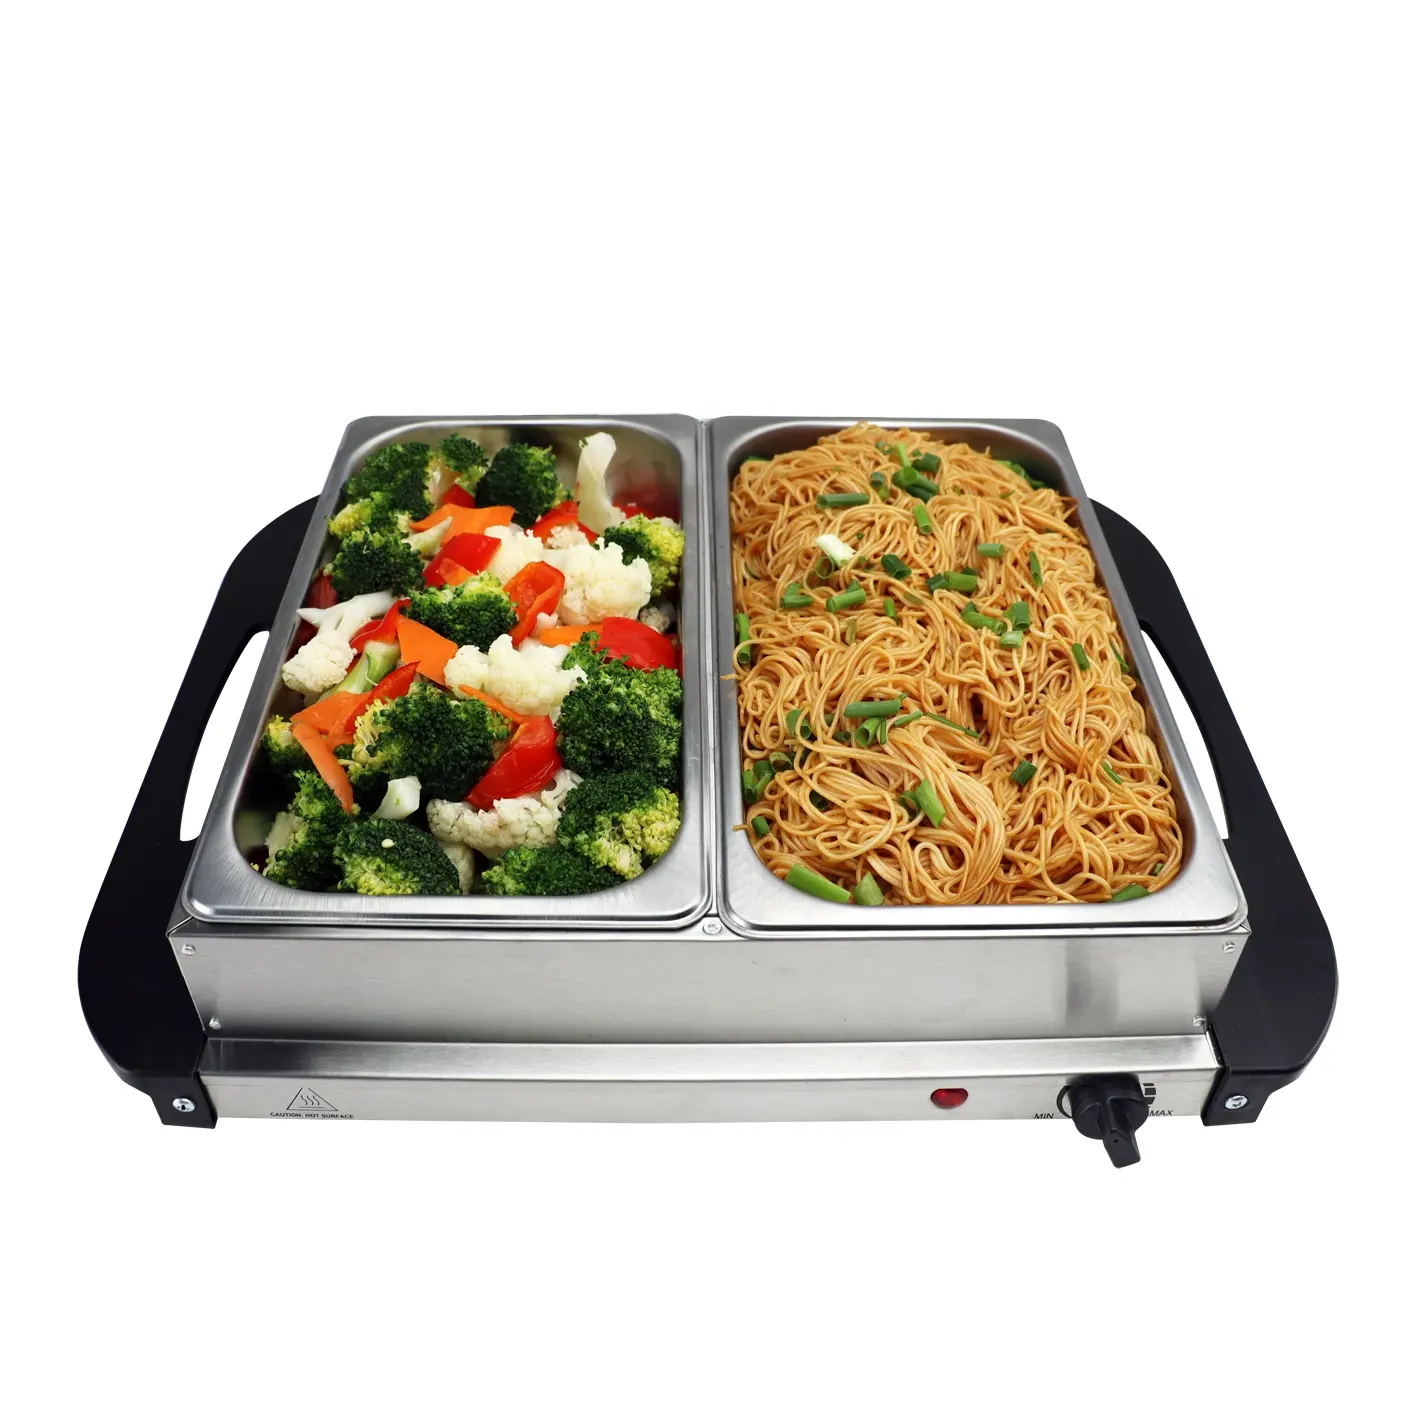 Wholesale electric buffet food heat warmer server set brands chefing dish